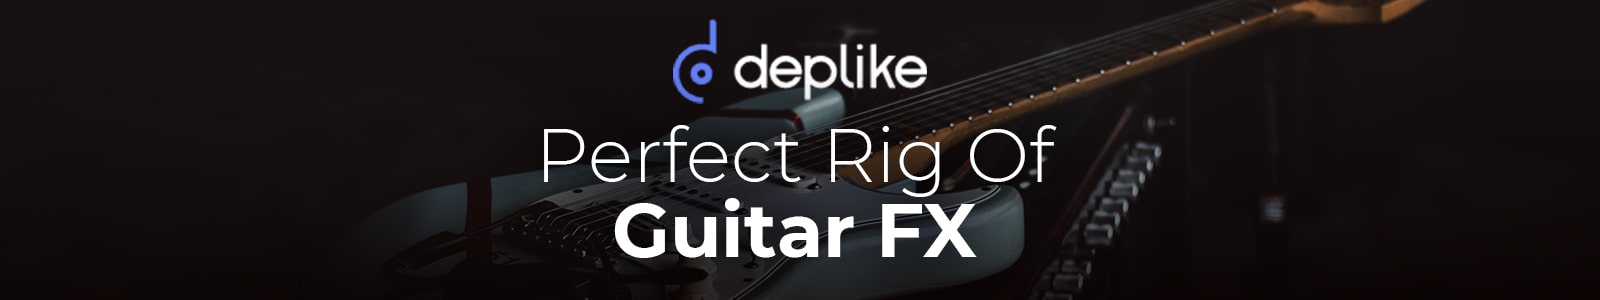 Deplike Guitar FX Bundle